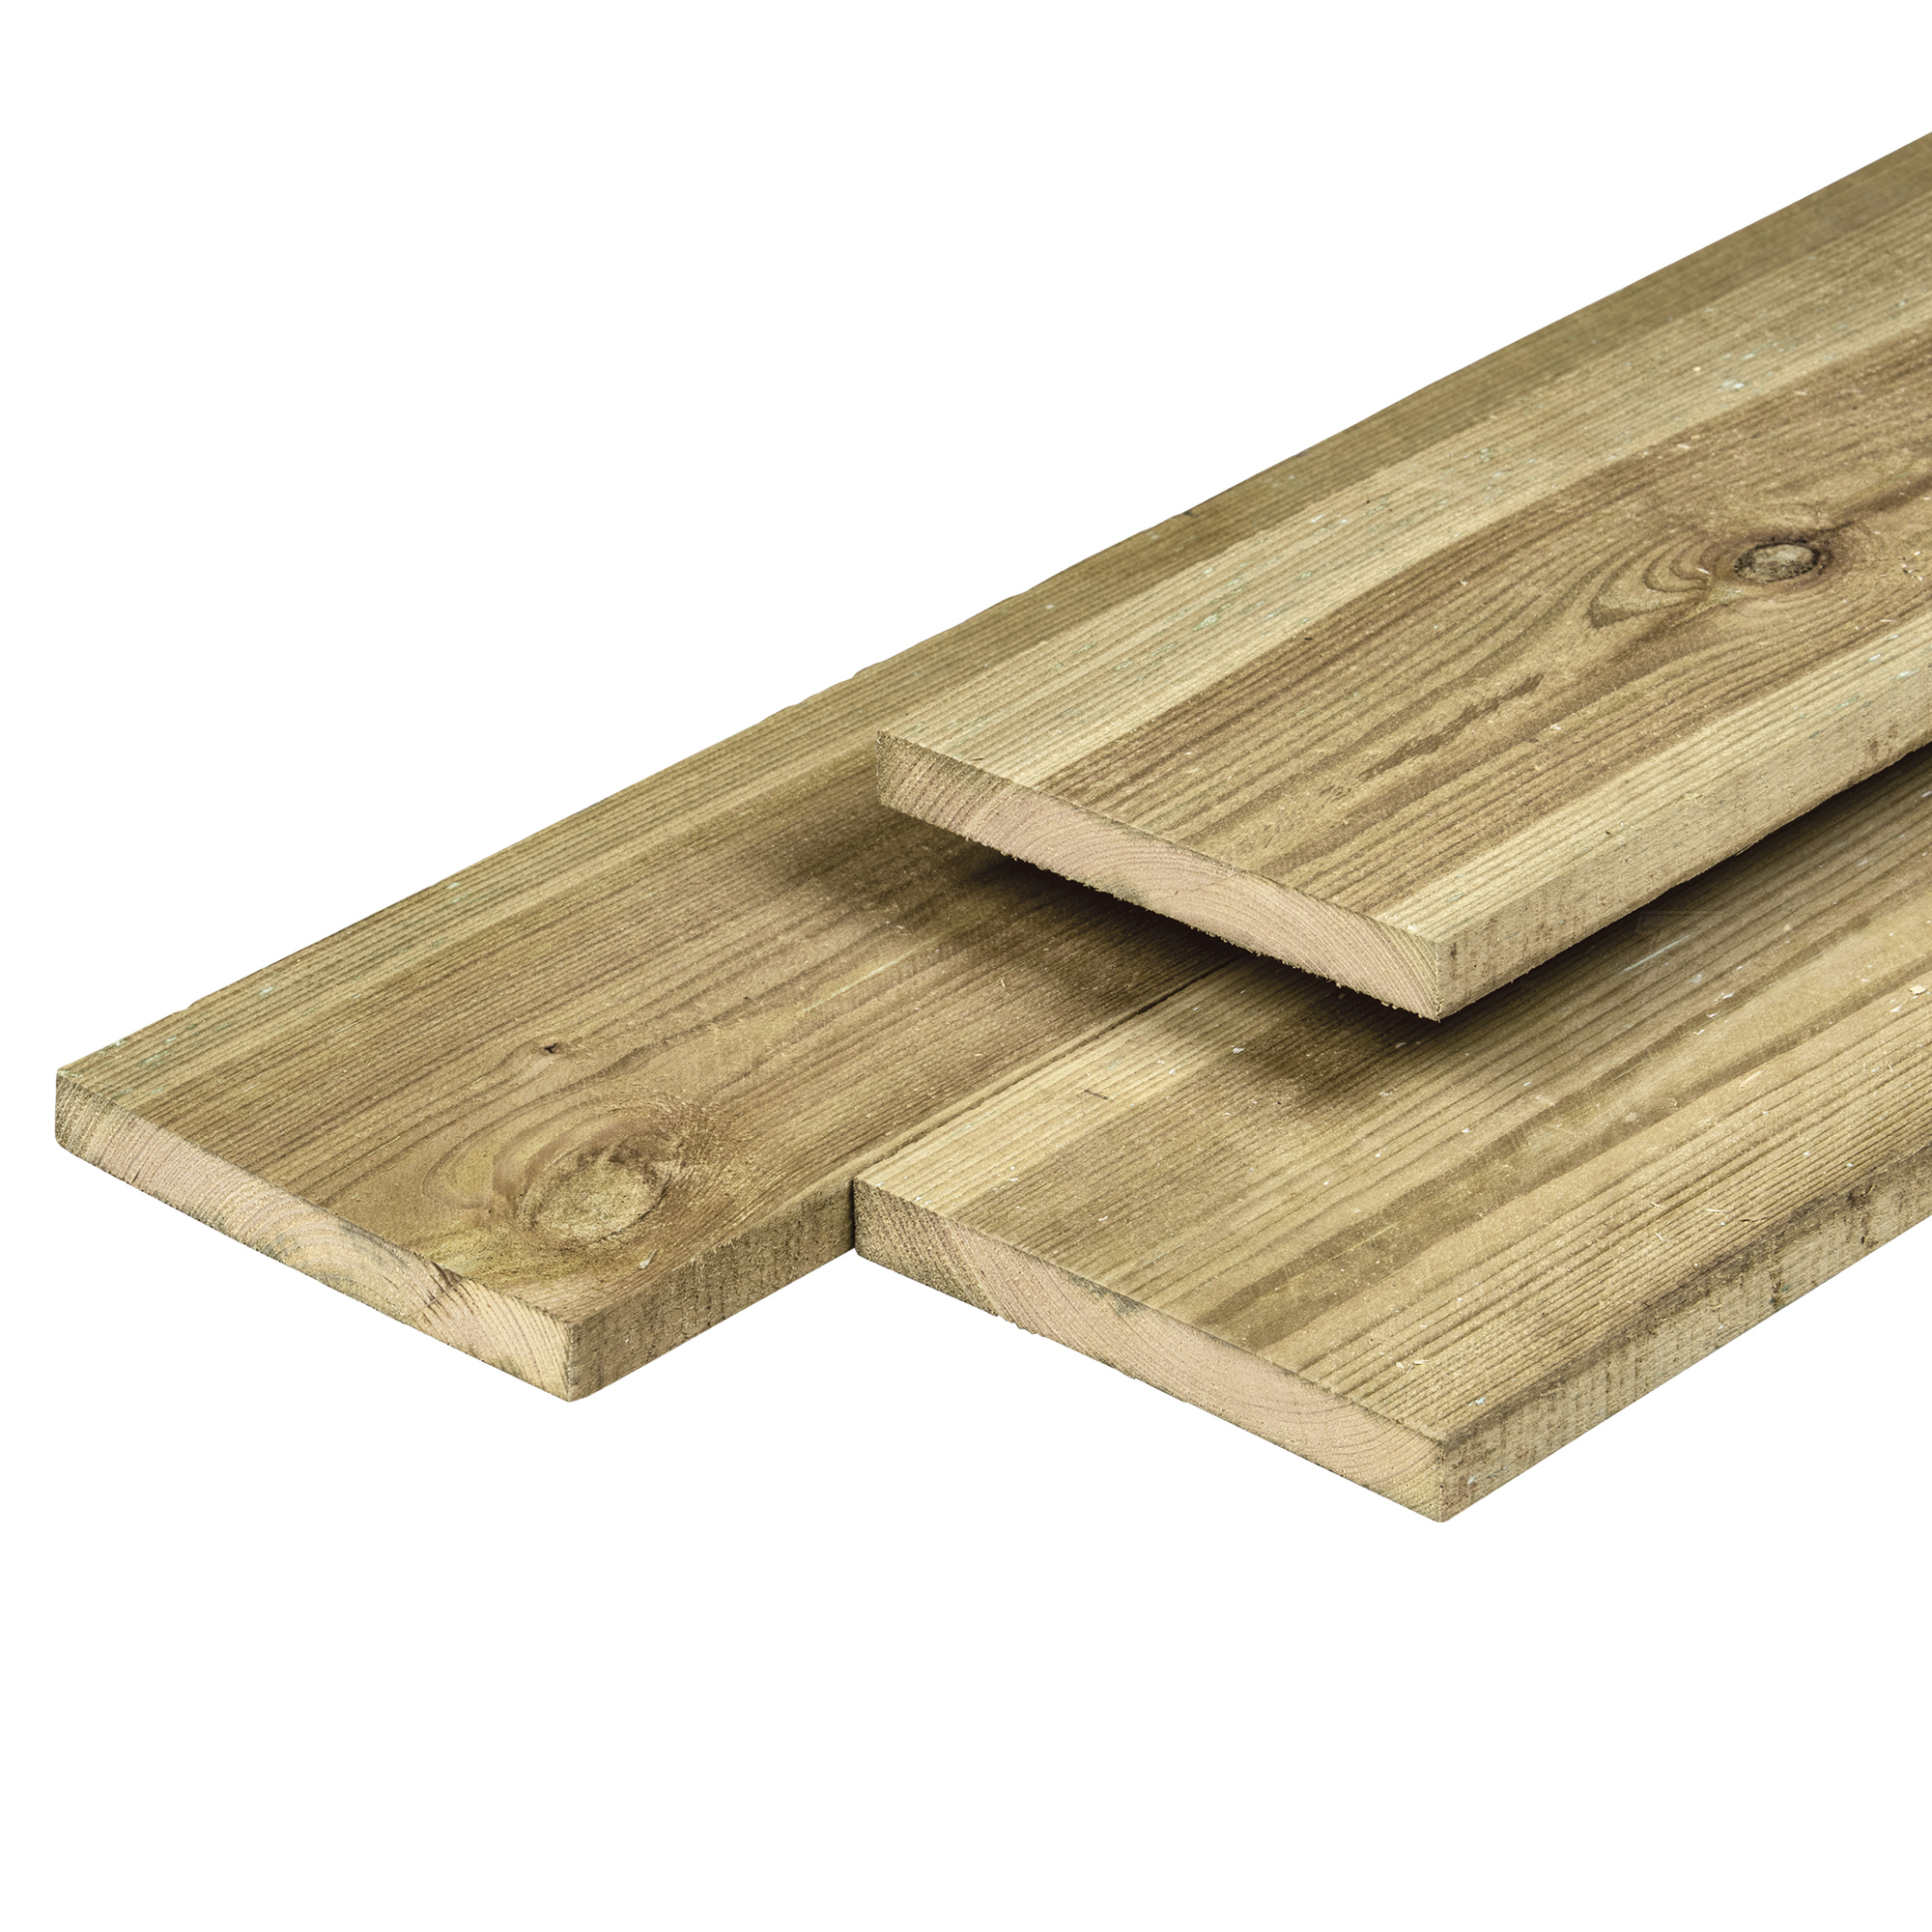 Plank ME grenen 1.6x14.0x180cm